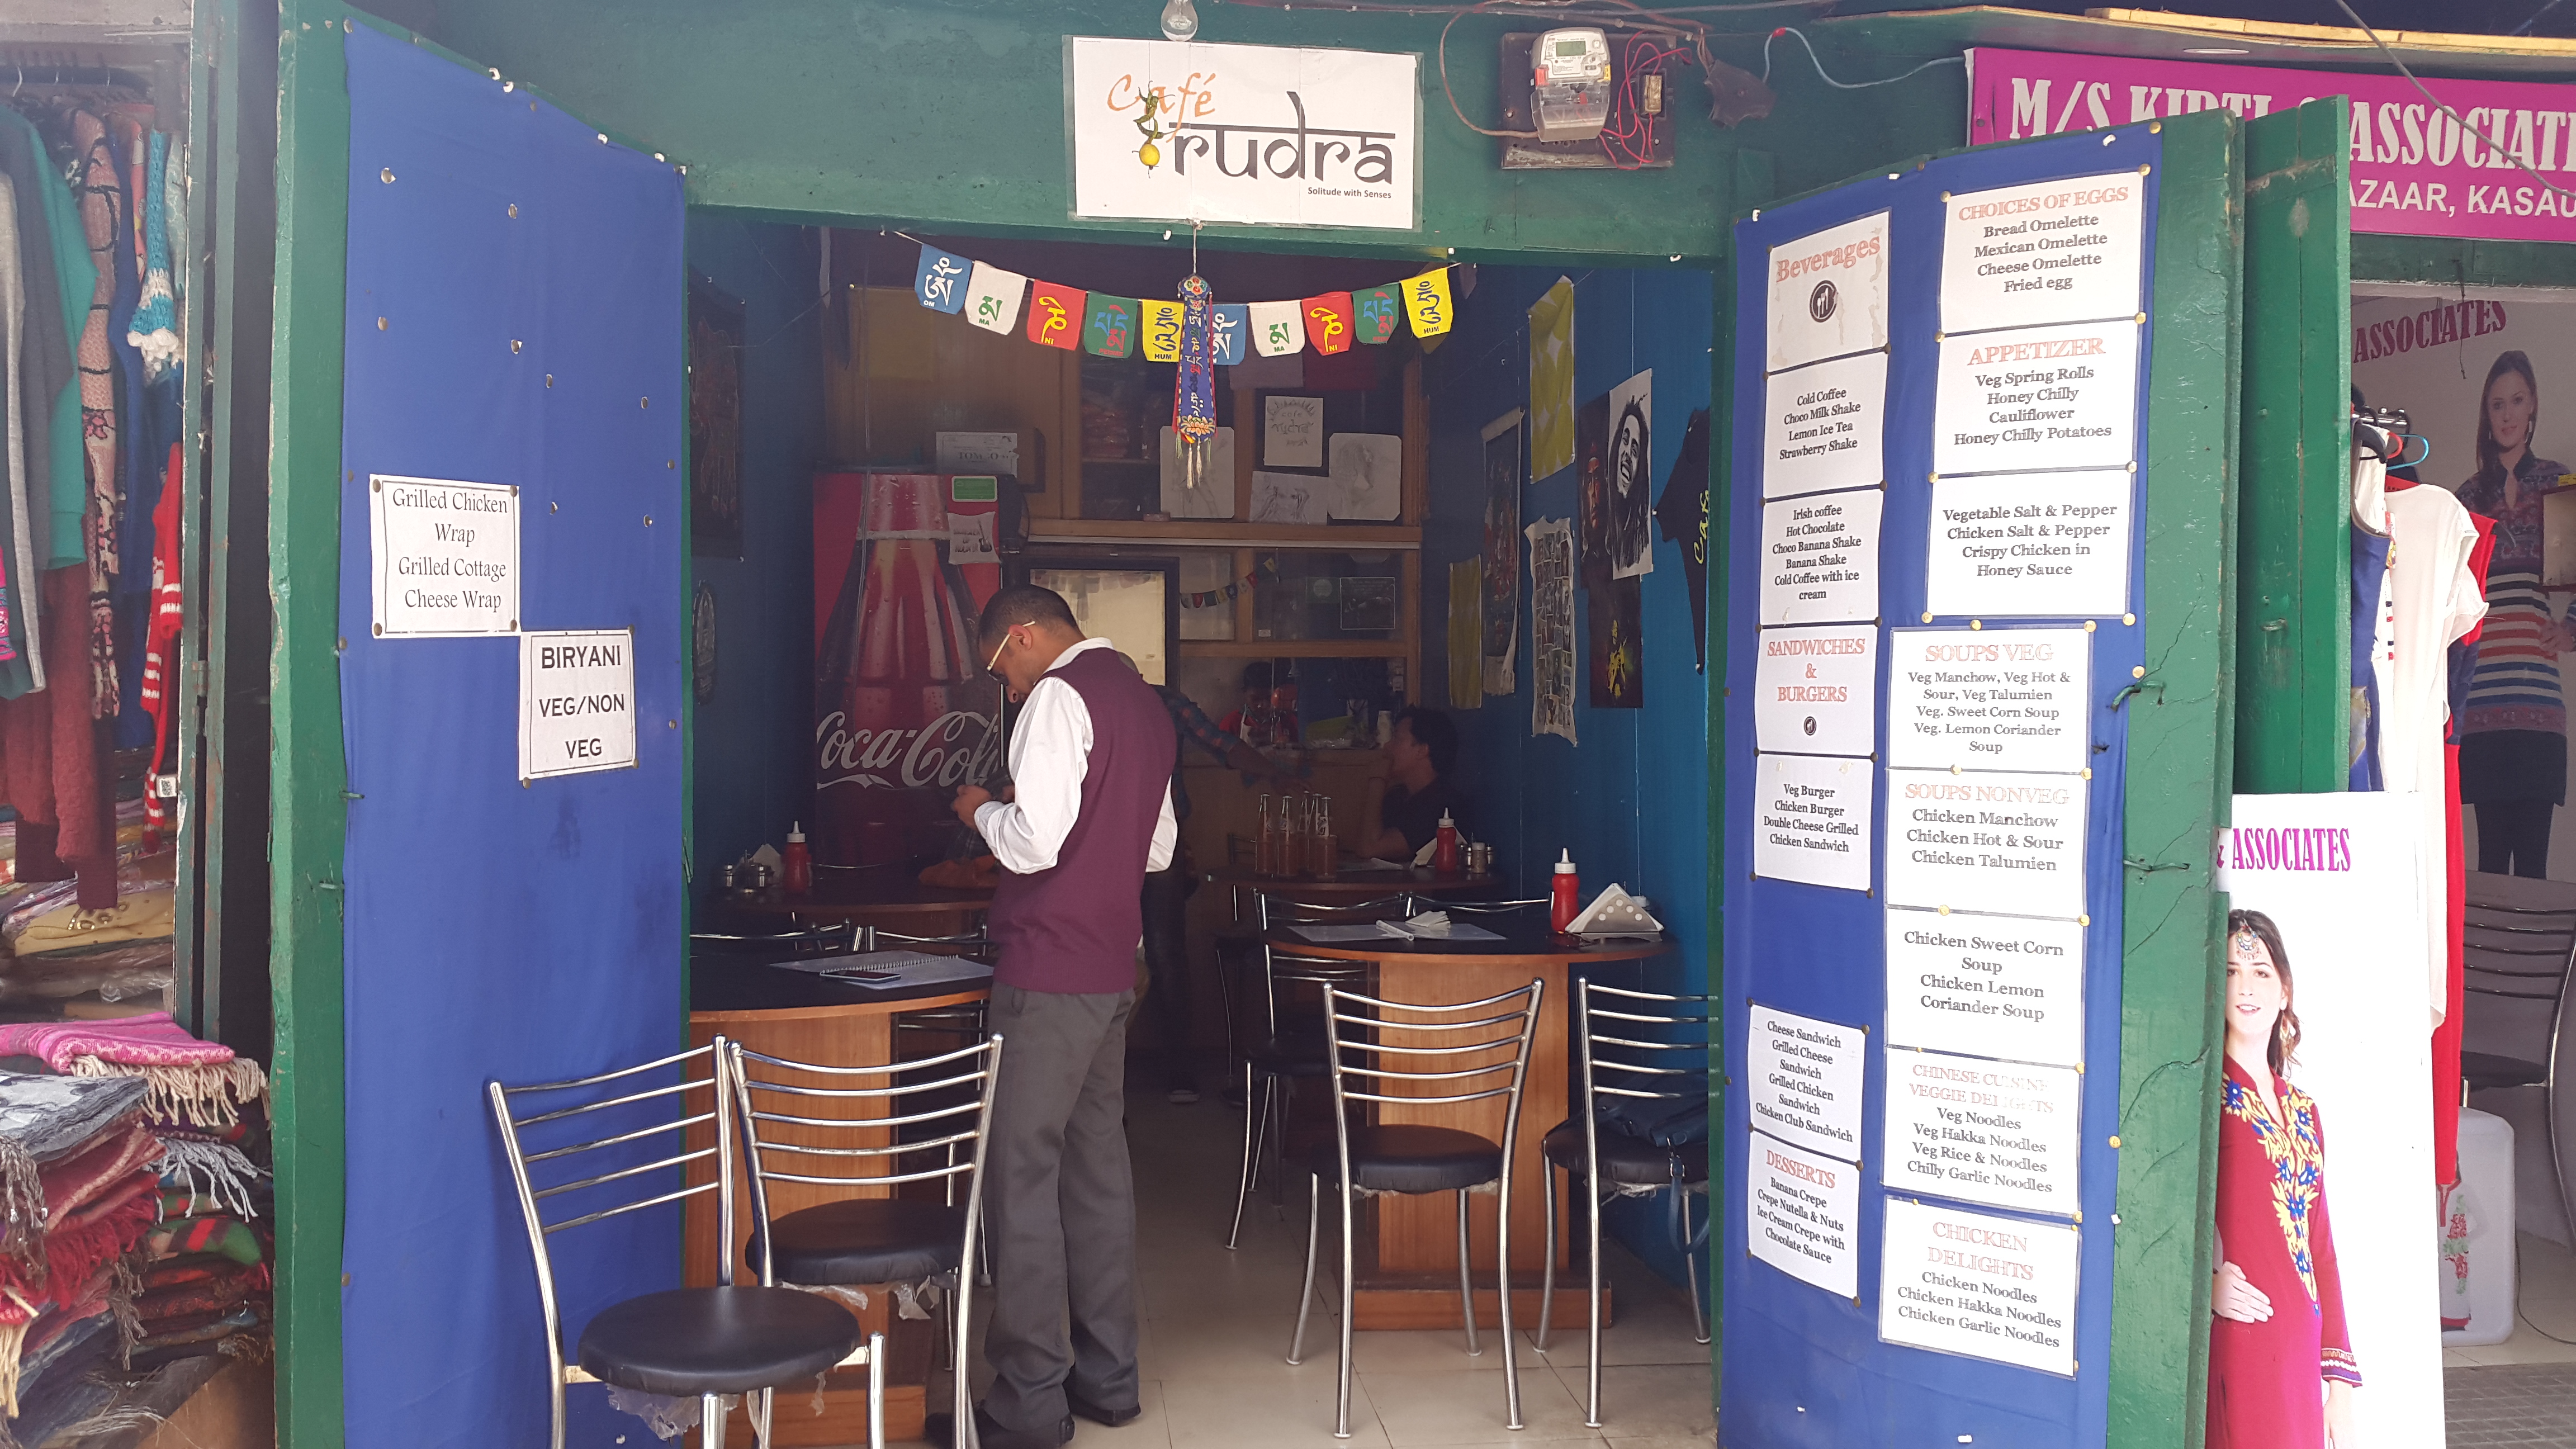 Rudra Cafe